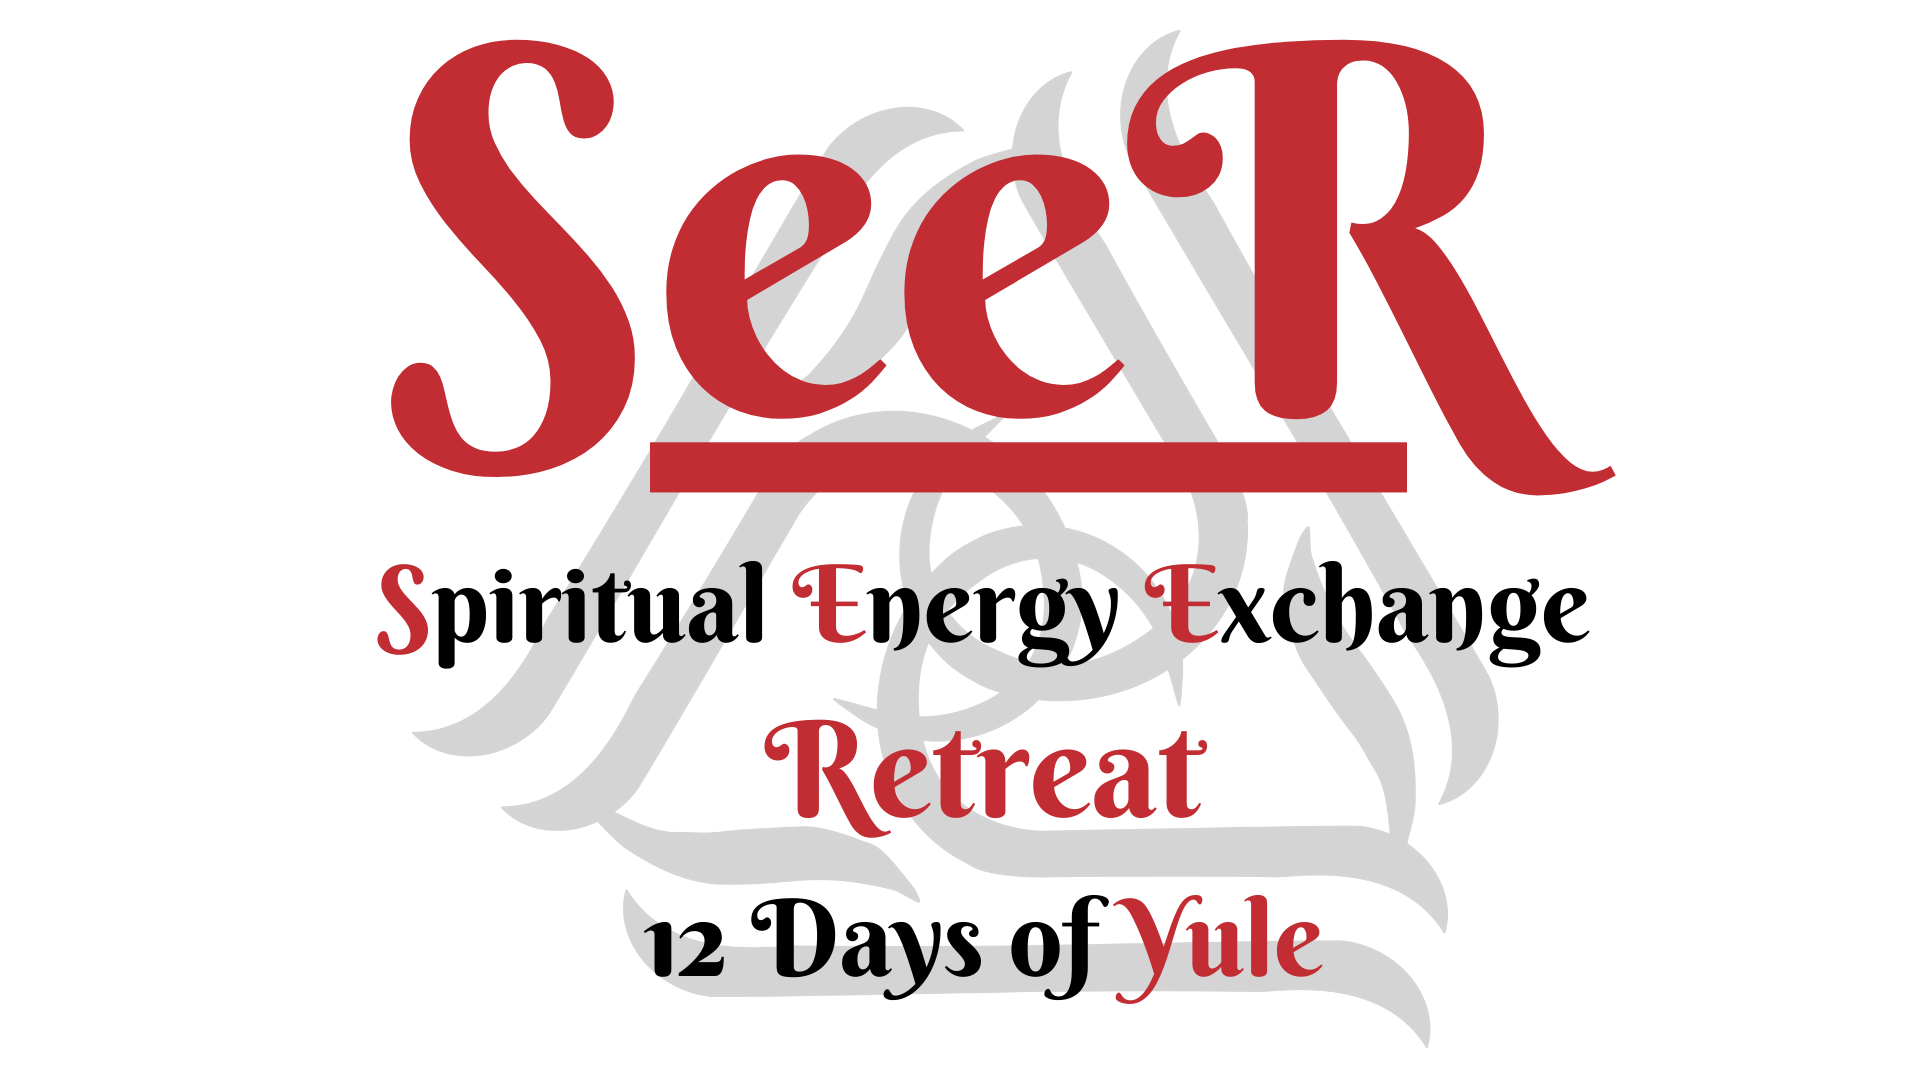 SeeR Spiritual Energy Exchange Retreat in South West Scotland